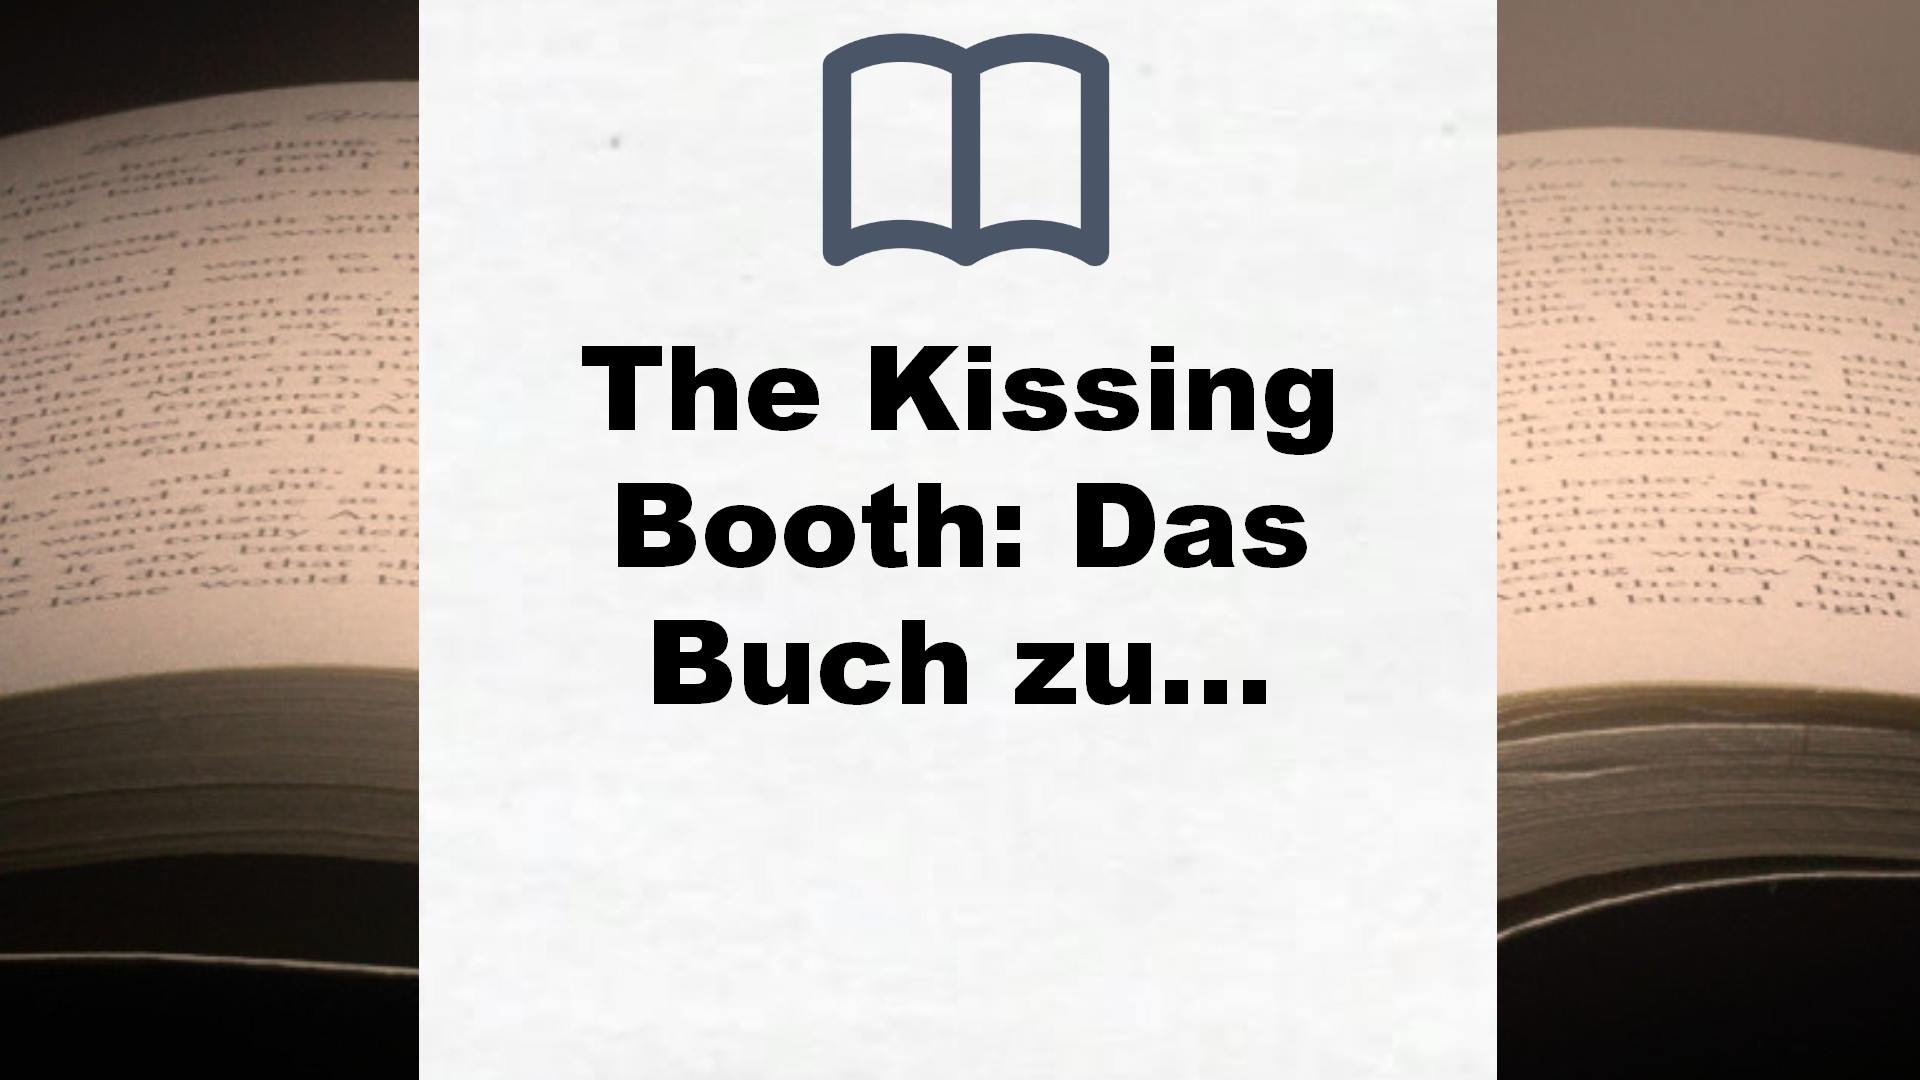 The Kissing Booth: Das Buch zum Netflix-Erfolg (Die Kissing-Booth-Reihe, Band 1) – Buchrezension